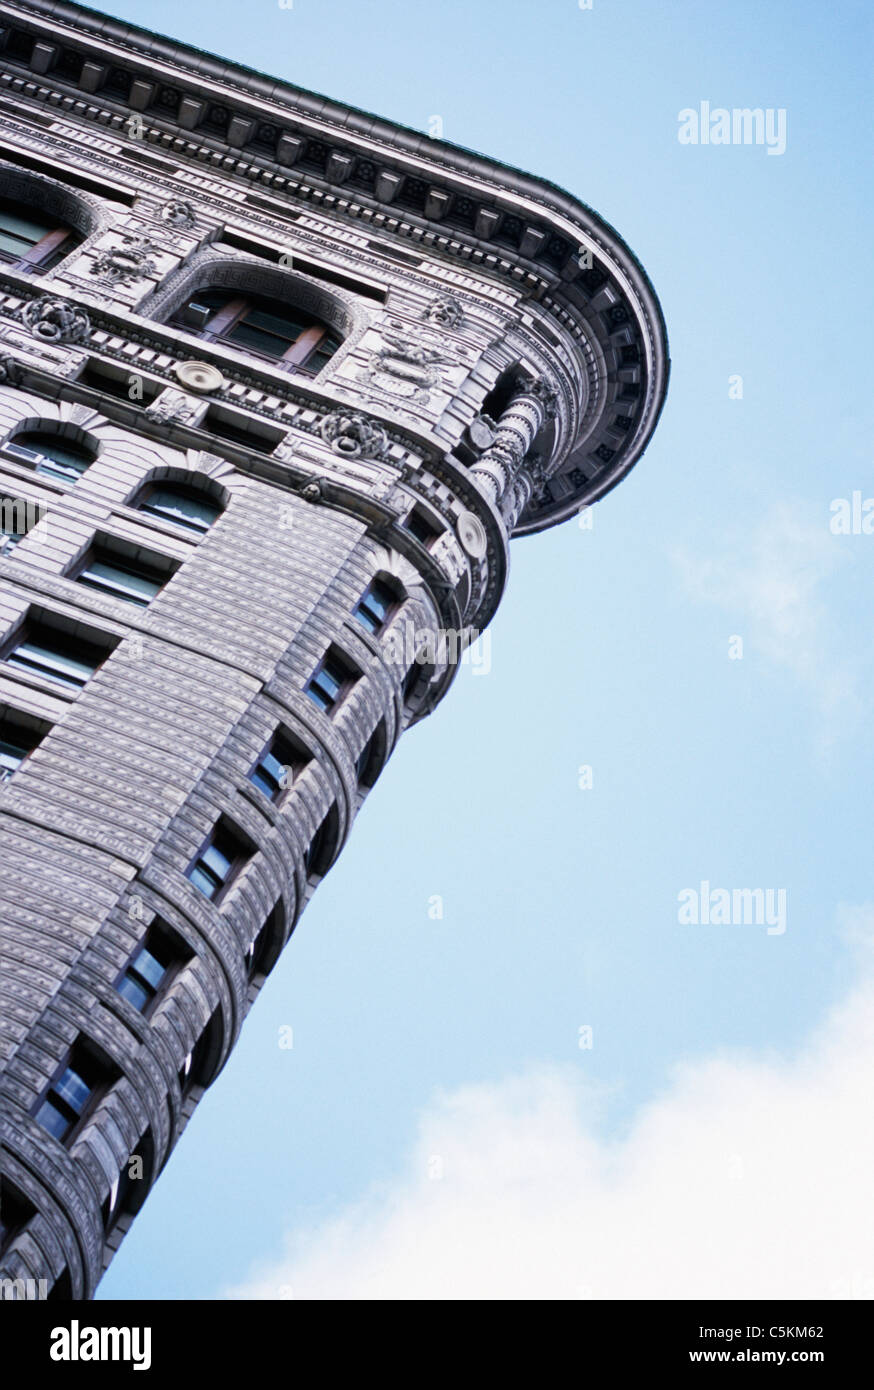 Flatiron Building prow, NYC Stock Photo